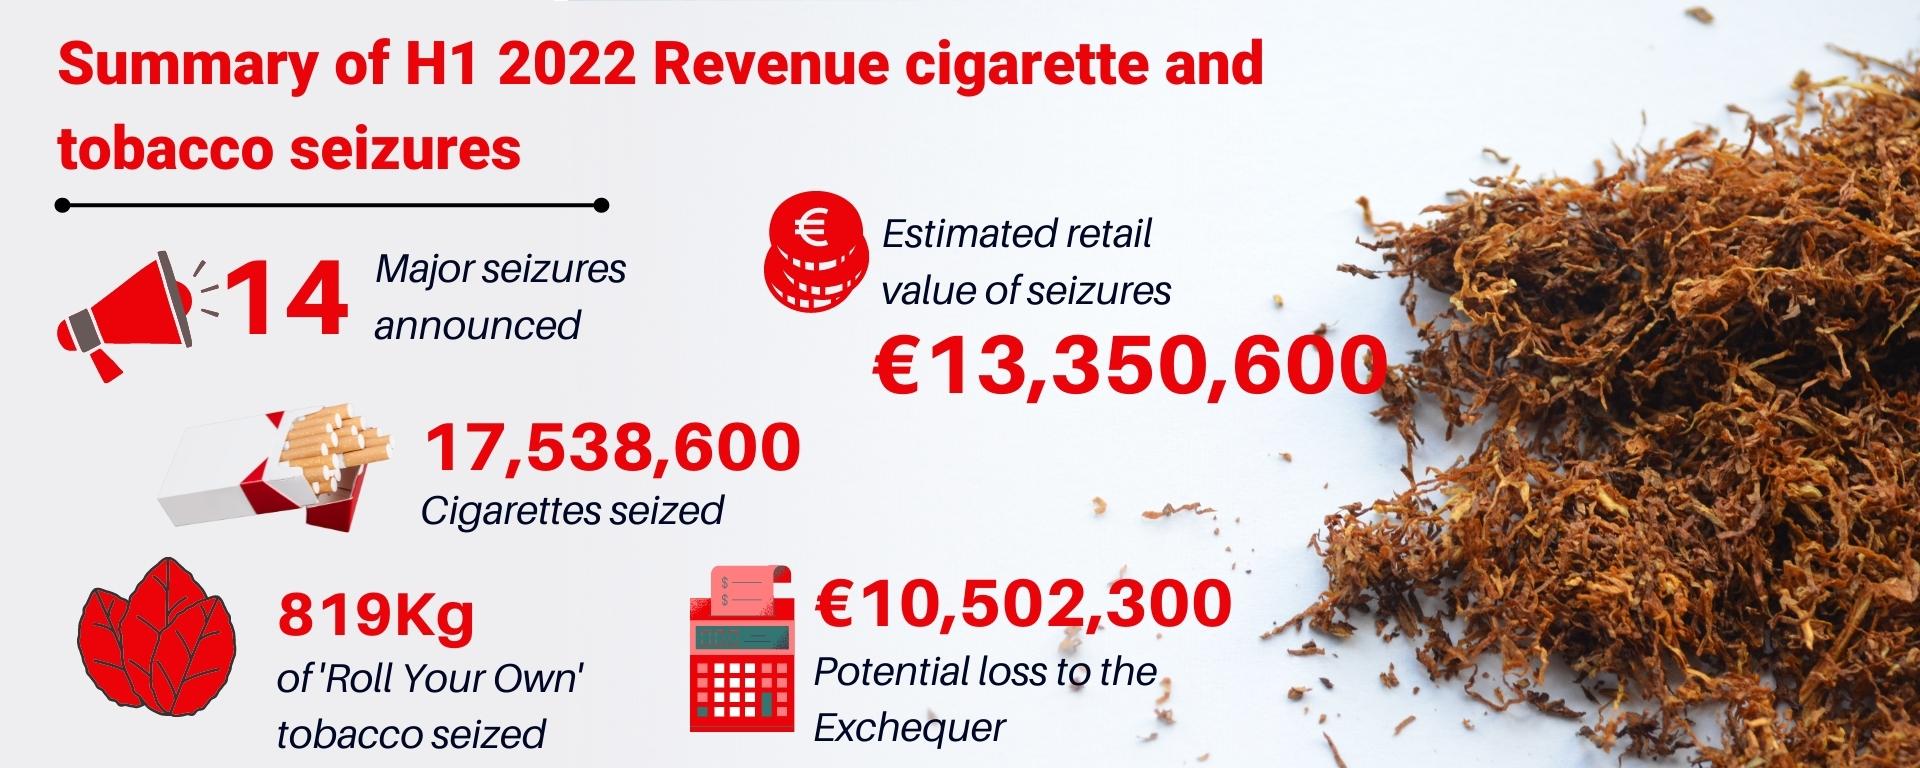 Summary of H1 2022 Revenue cigarette and tobacco seizures (1920 × 768px)